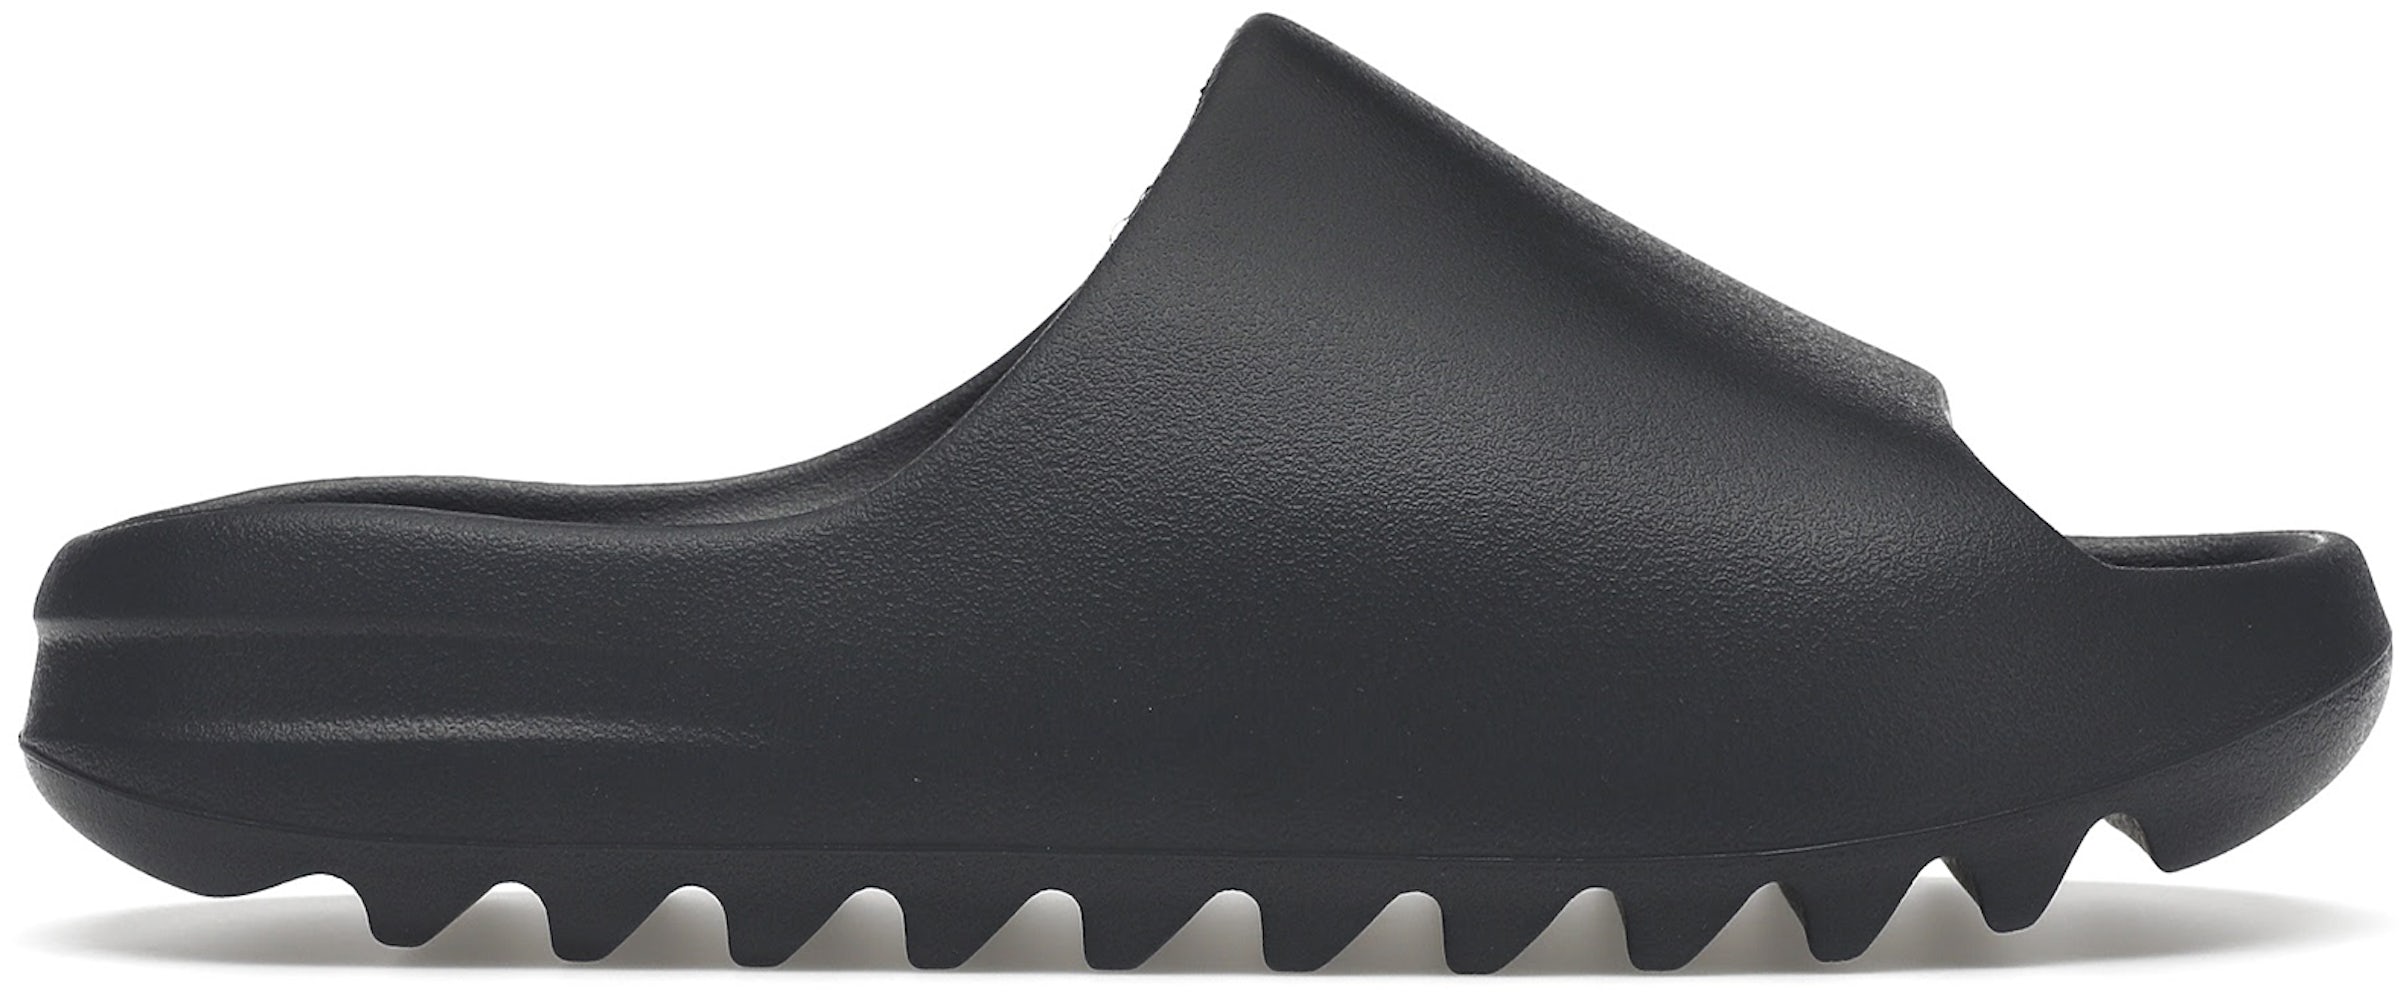 Louis Vuitton Schuhe Pilow Schlappen Slides schwarz Gr. 38